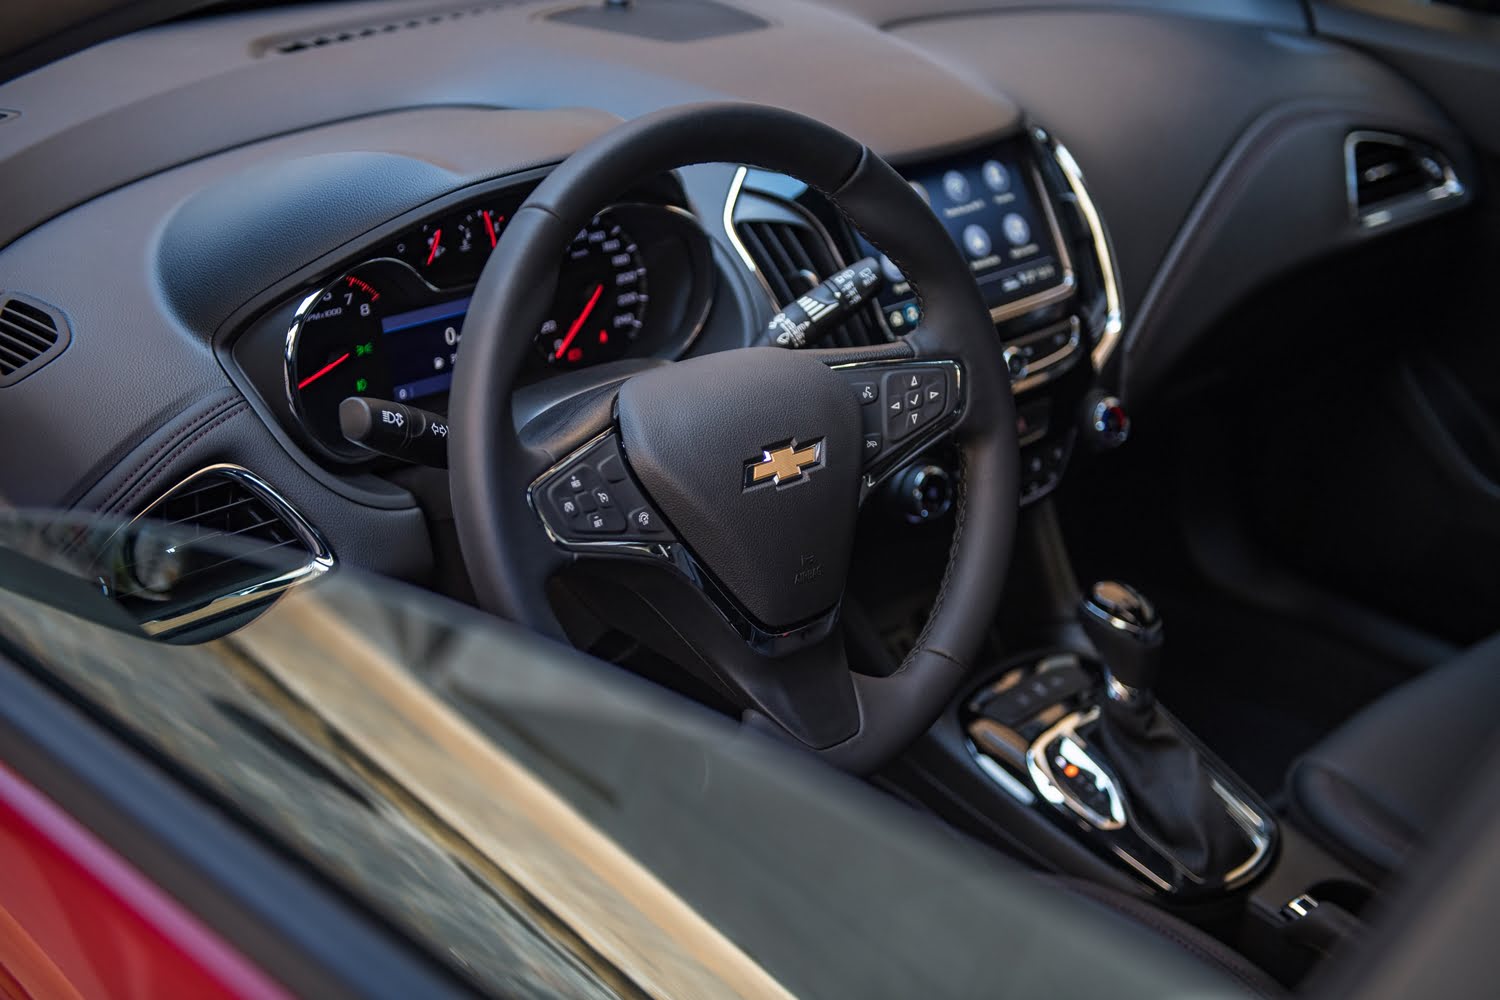 Chevrolet Cruze Sedan: Models, Generations and Details